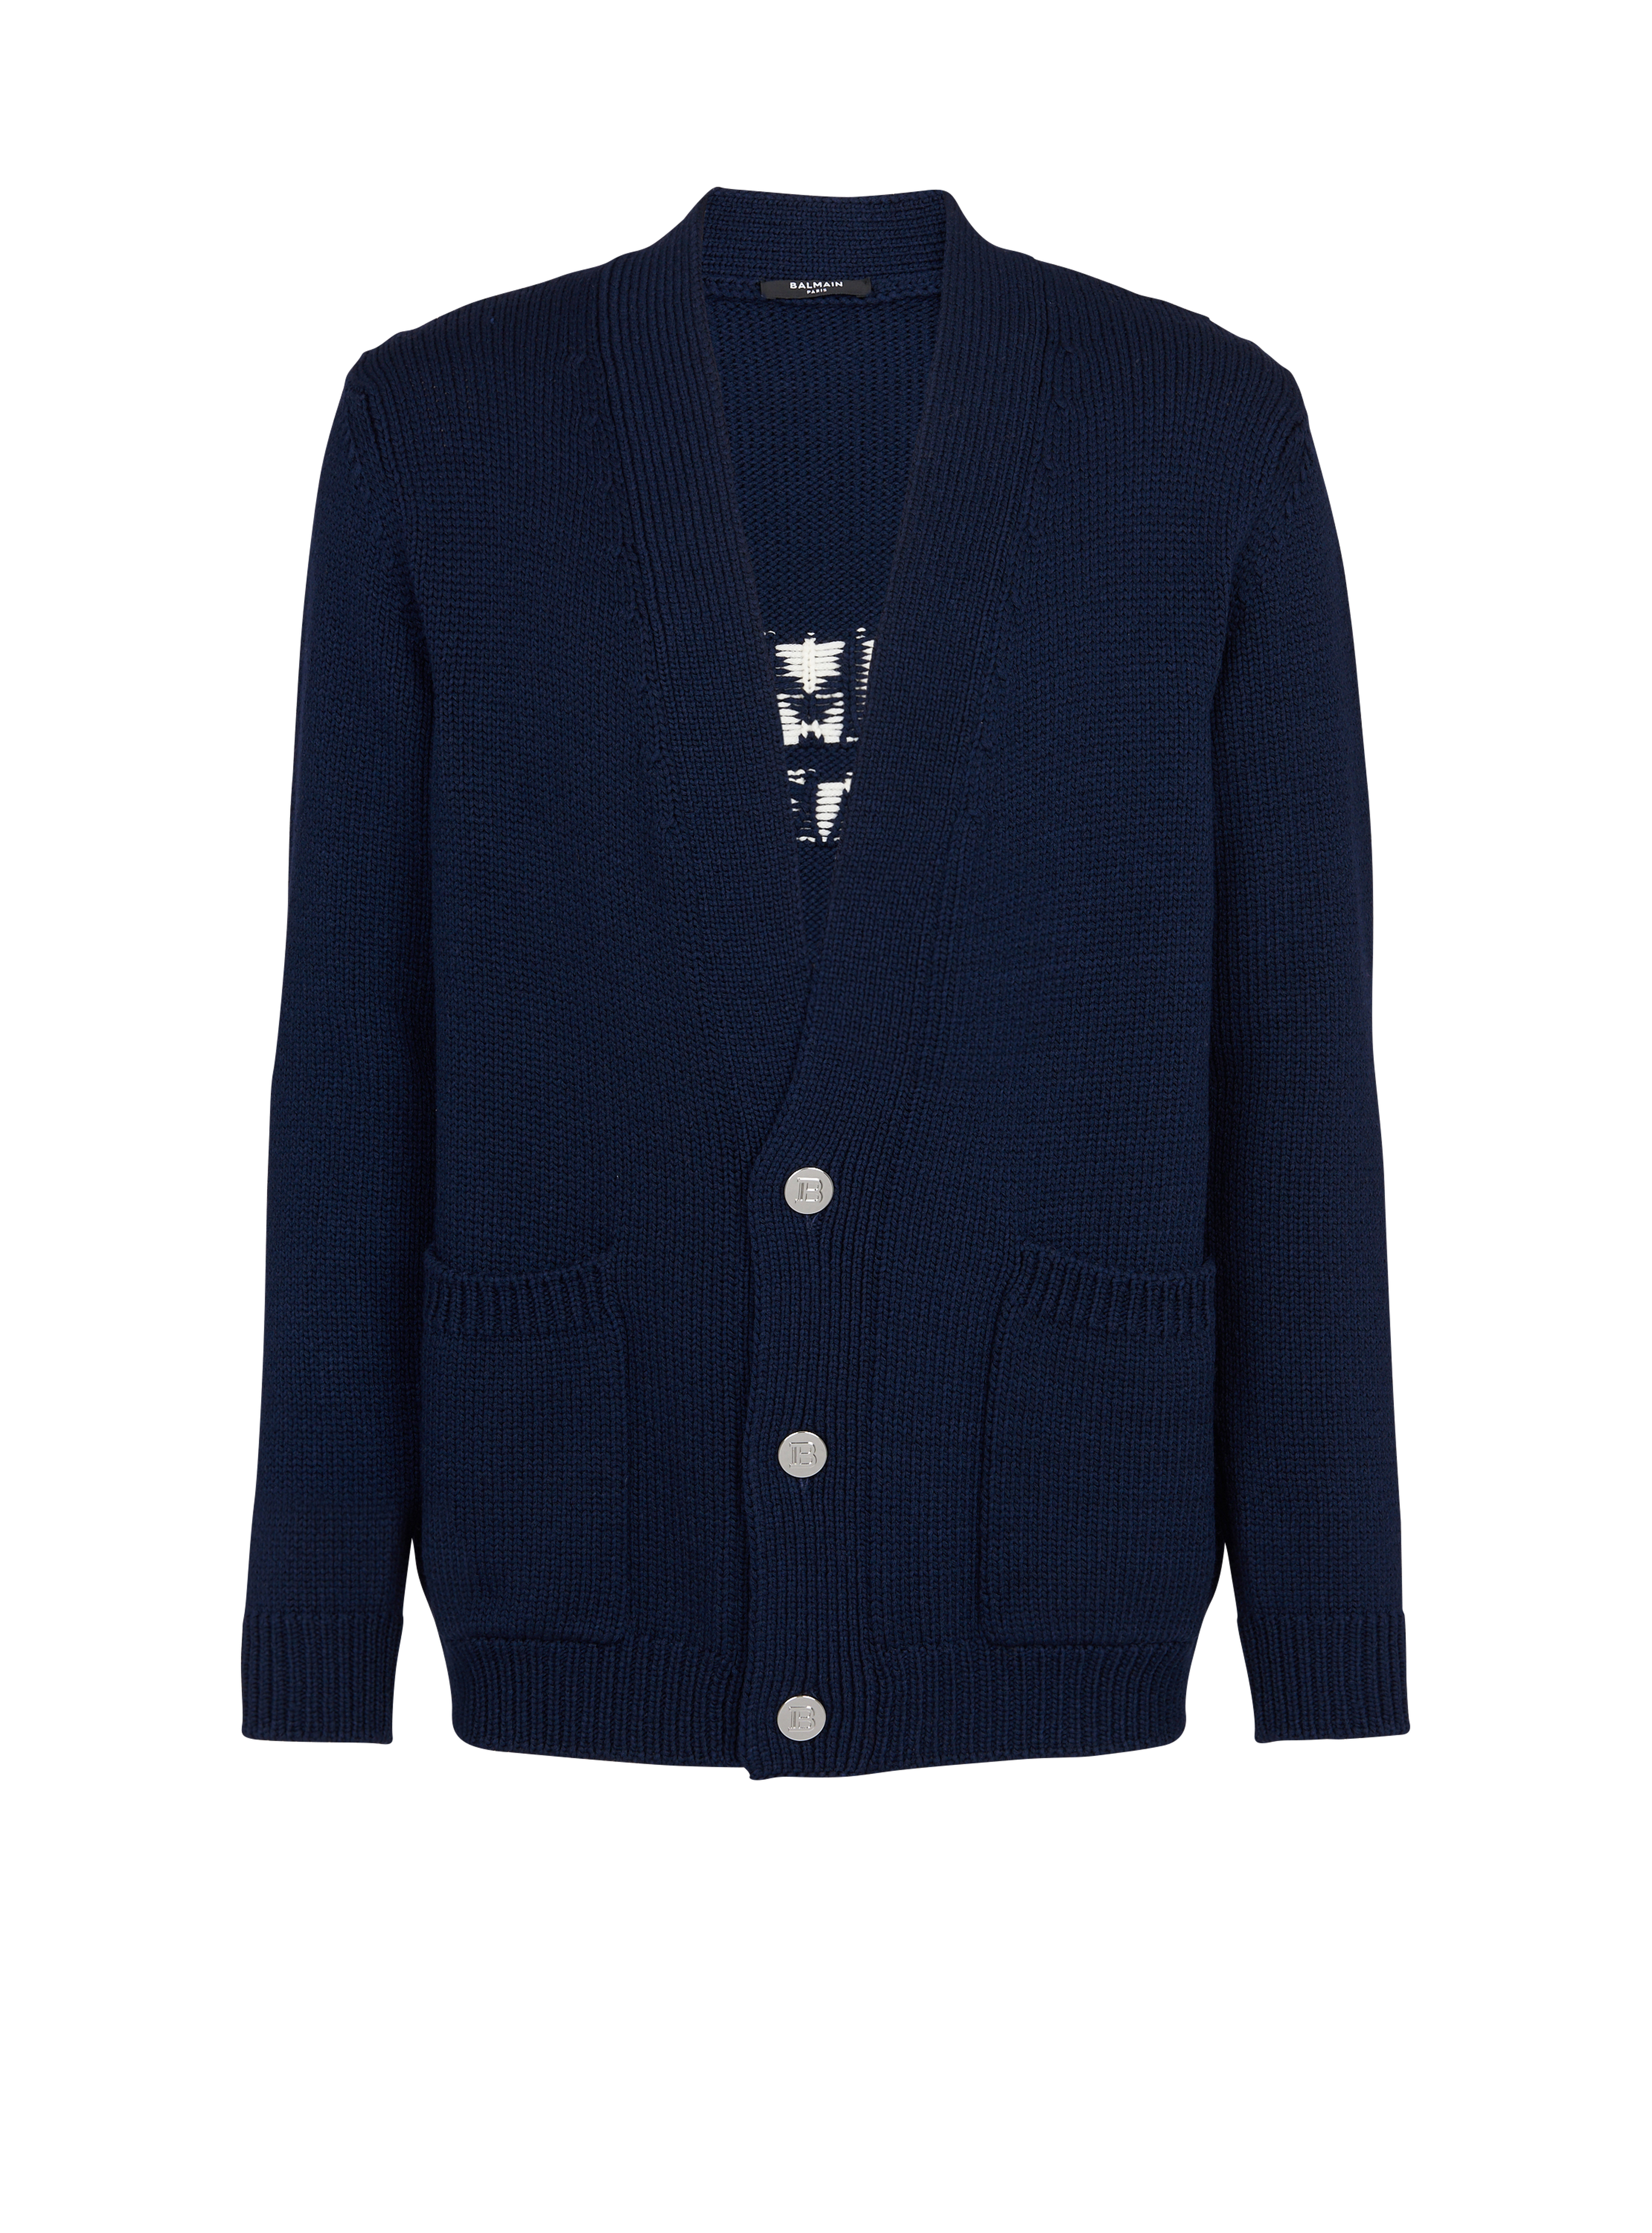 Cardigan in maglia con logo Balmain Paris, blu